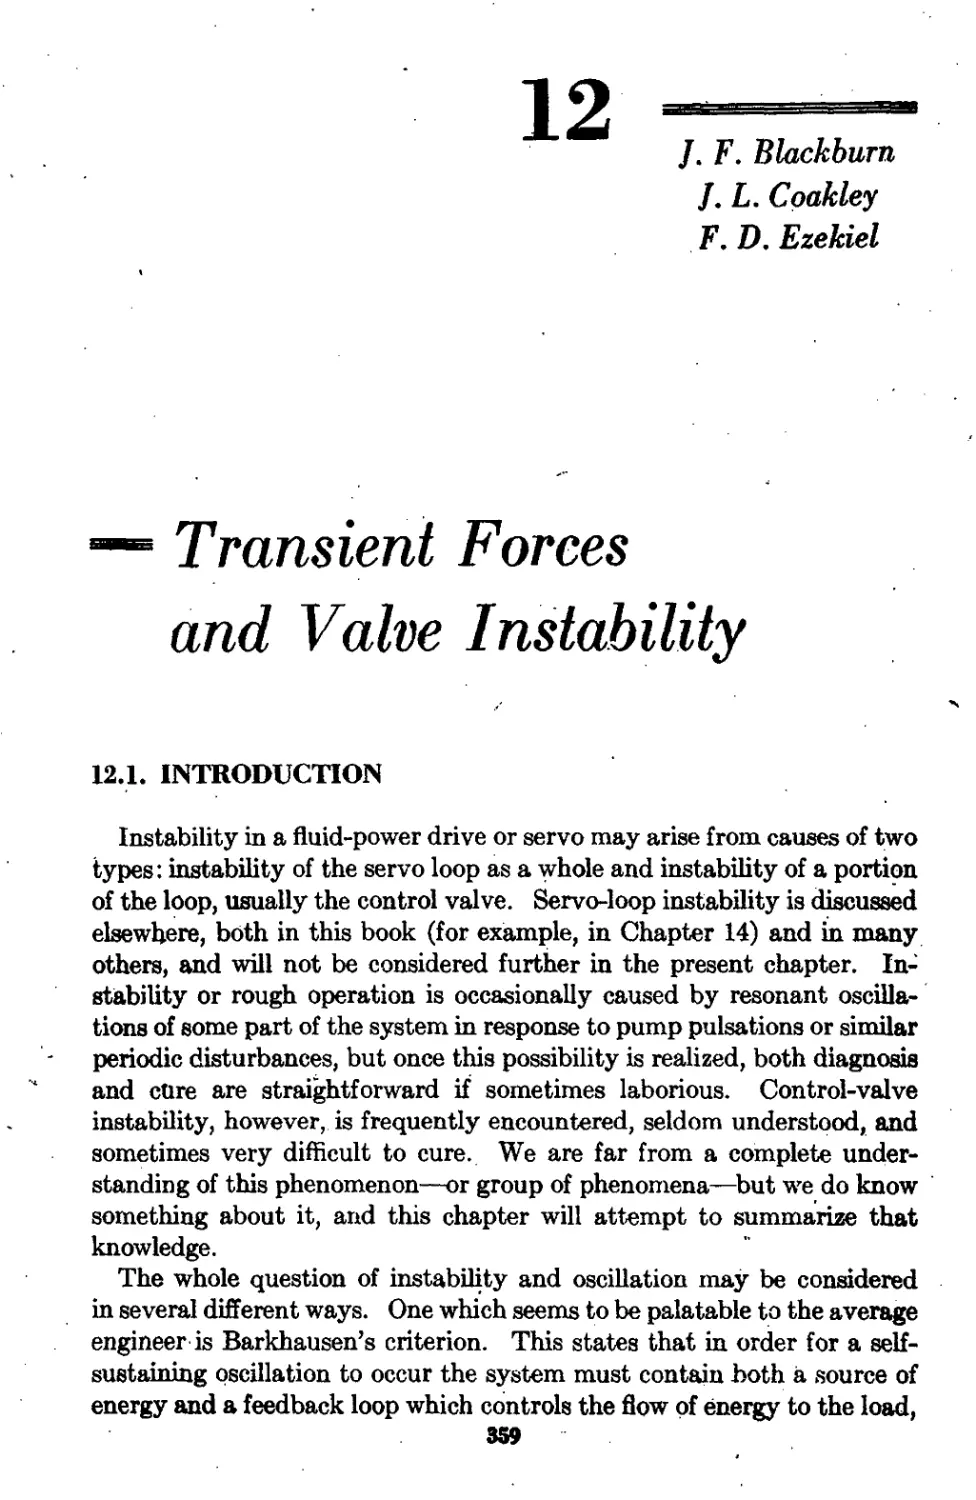 Chapter 12 Transient Forces and Valve Instability: J. F. Blackburn, J. L. Coakley, and F.D.Ezekiel